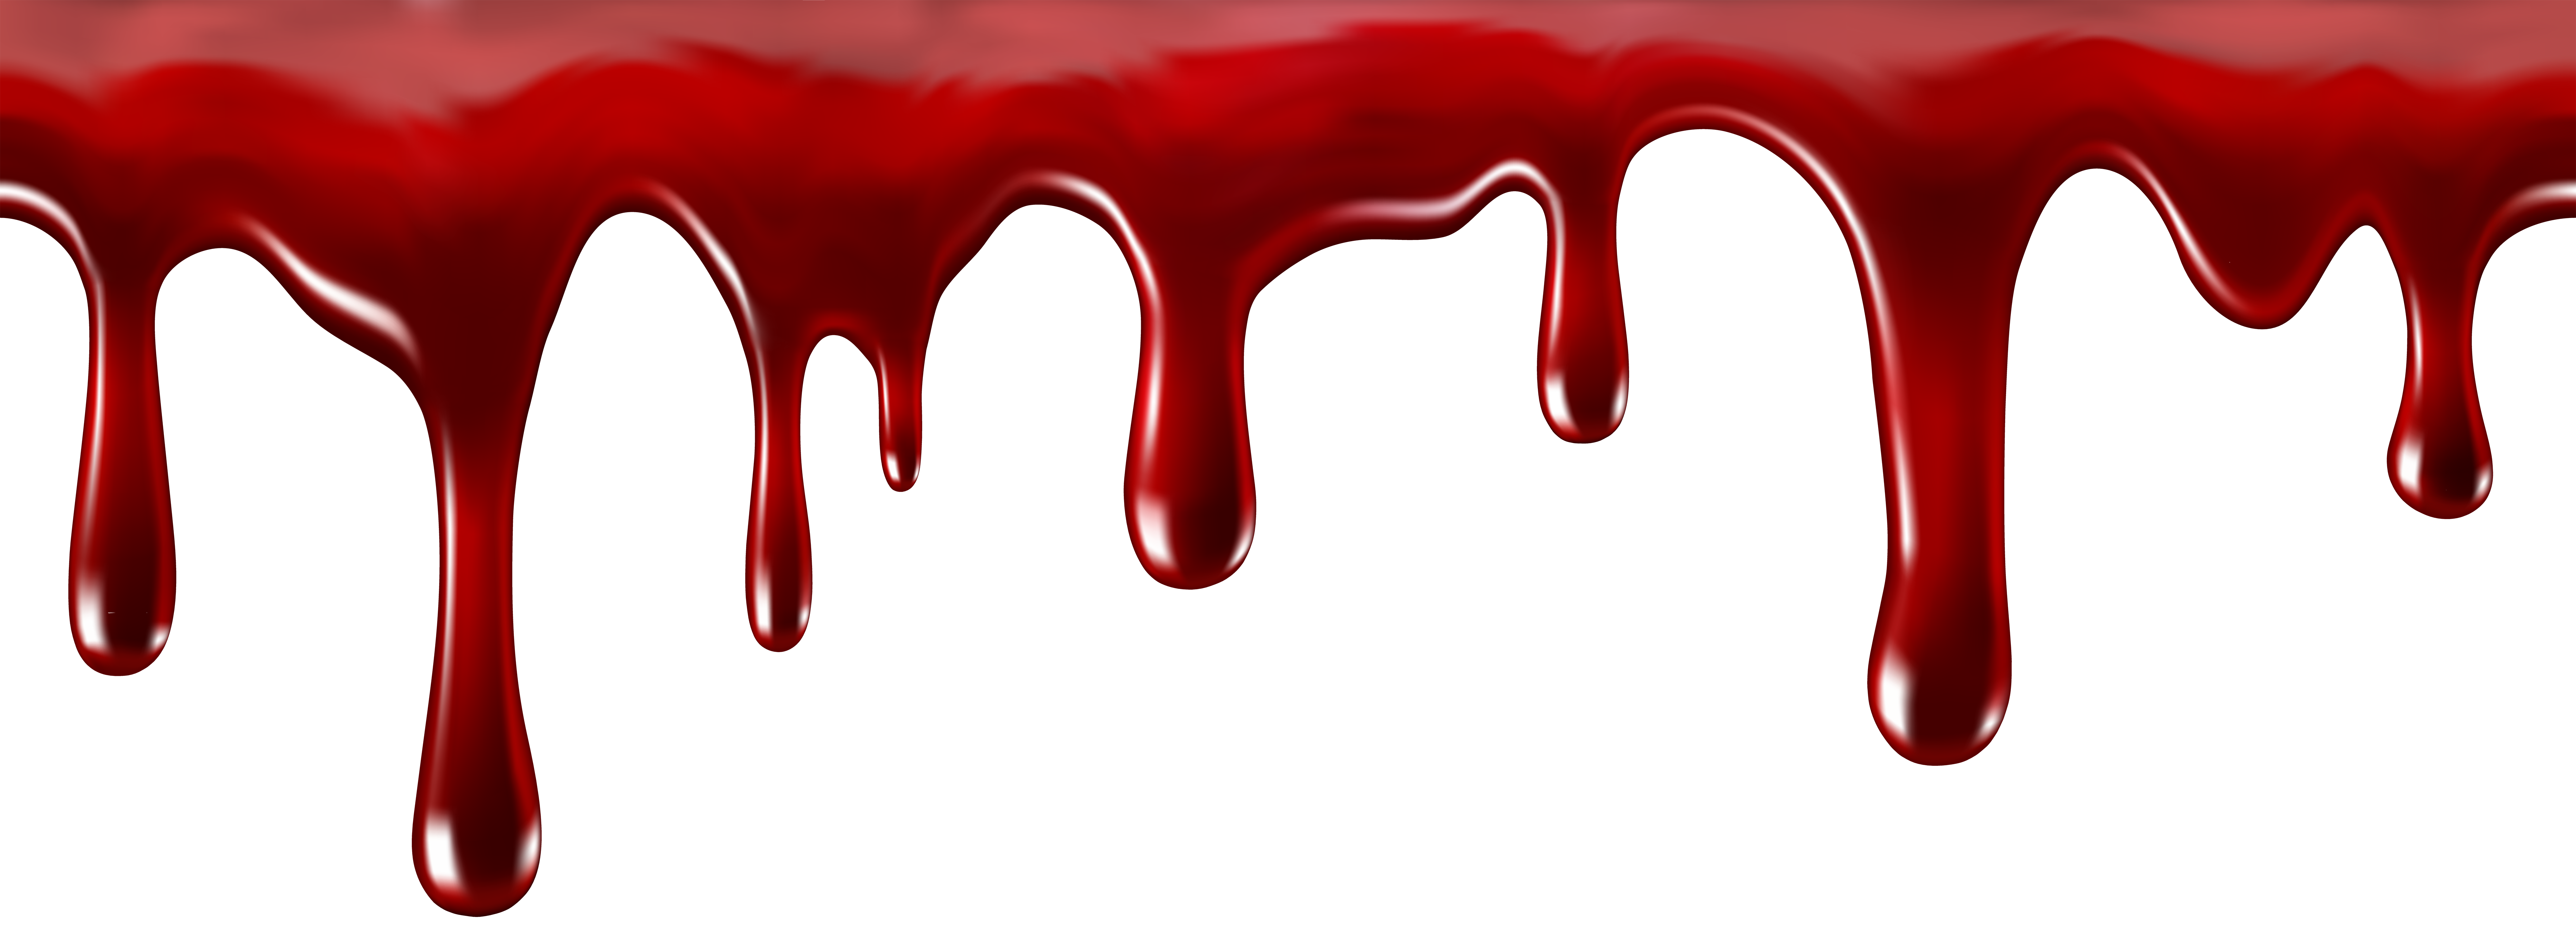 blood border clip art - photo #37